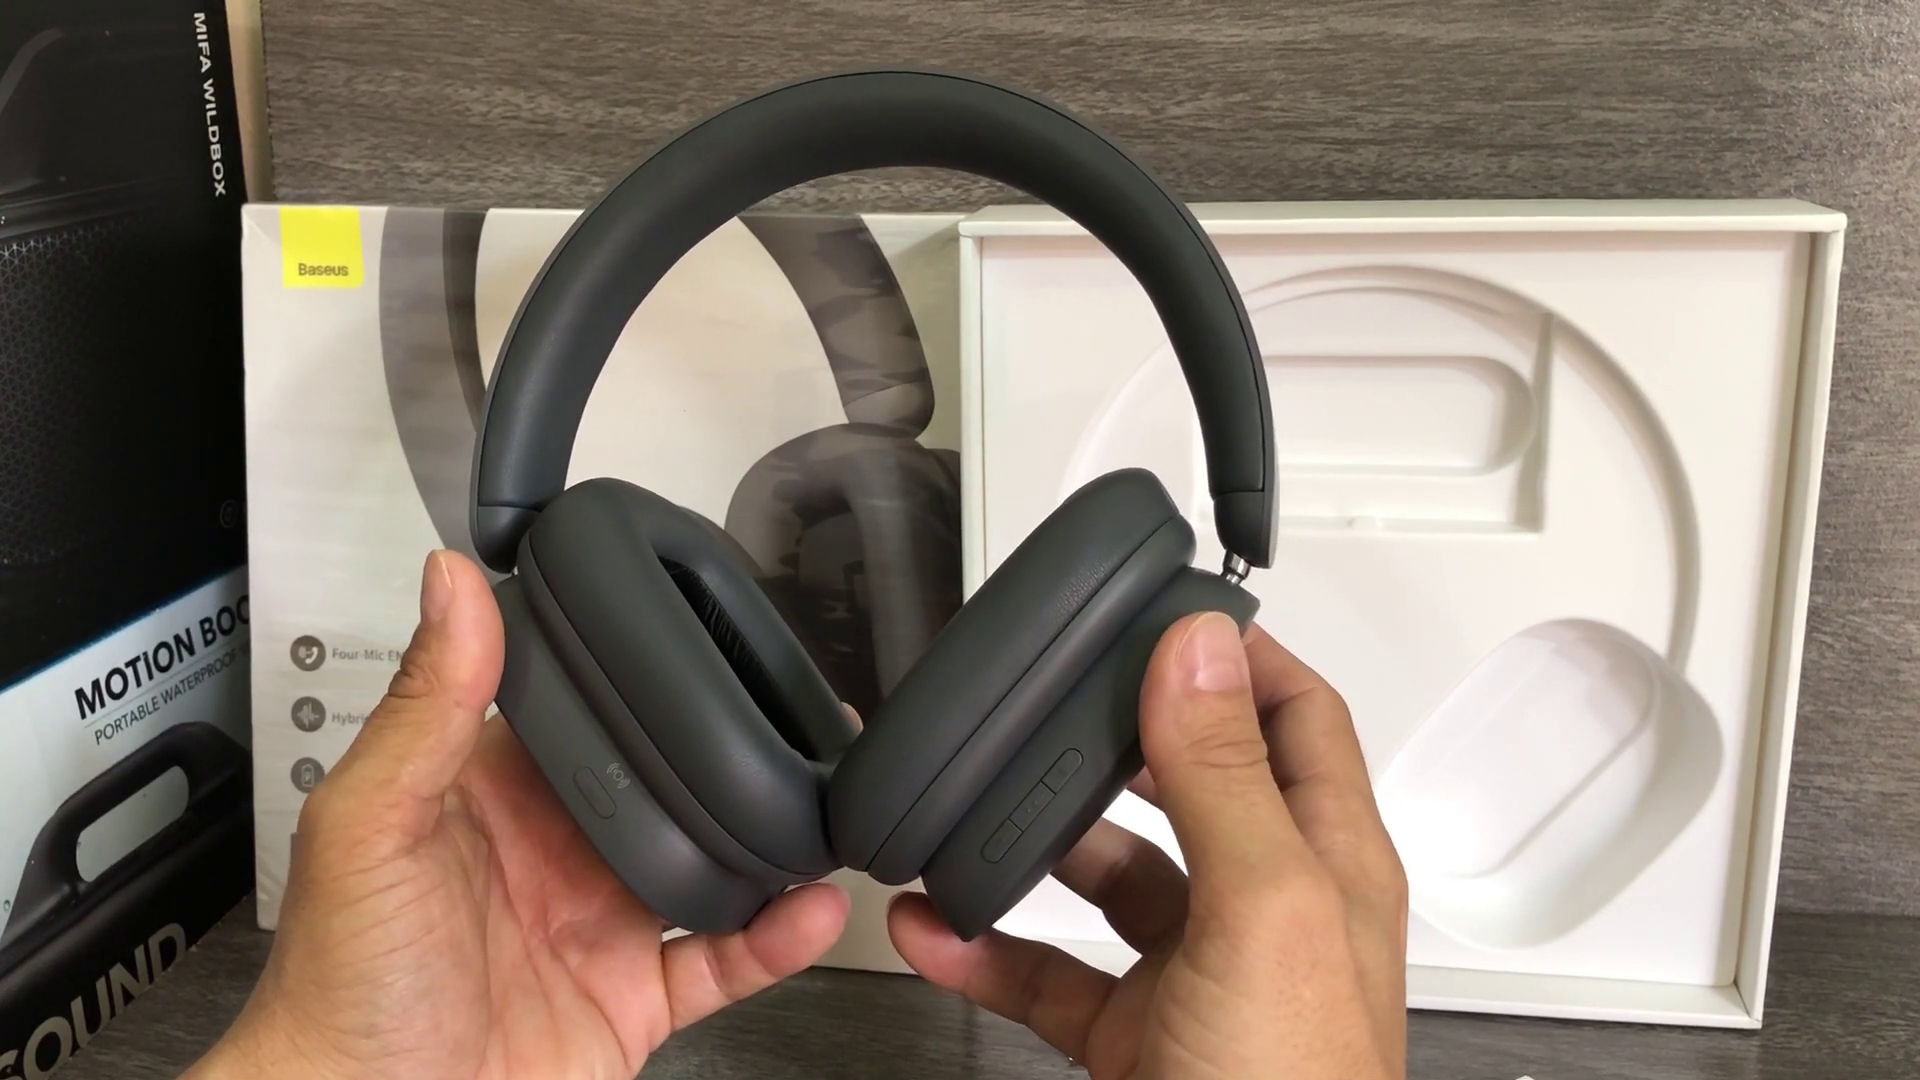 Baseus H1 Review - The Best Budget Wireless Headphones Under 60$